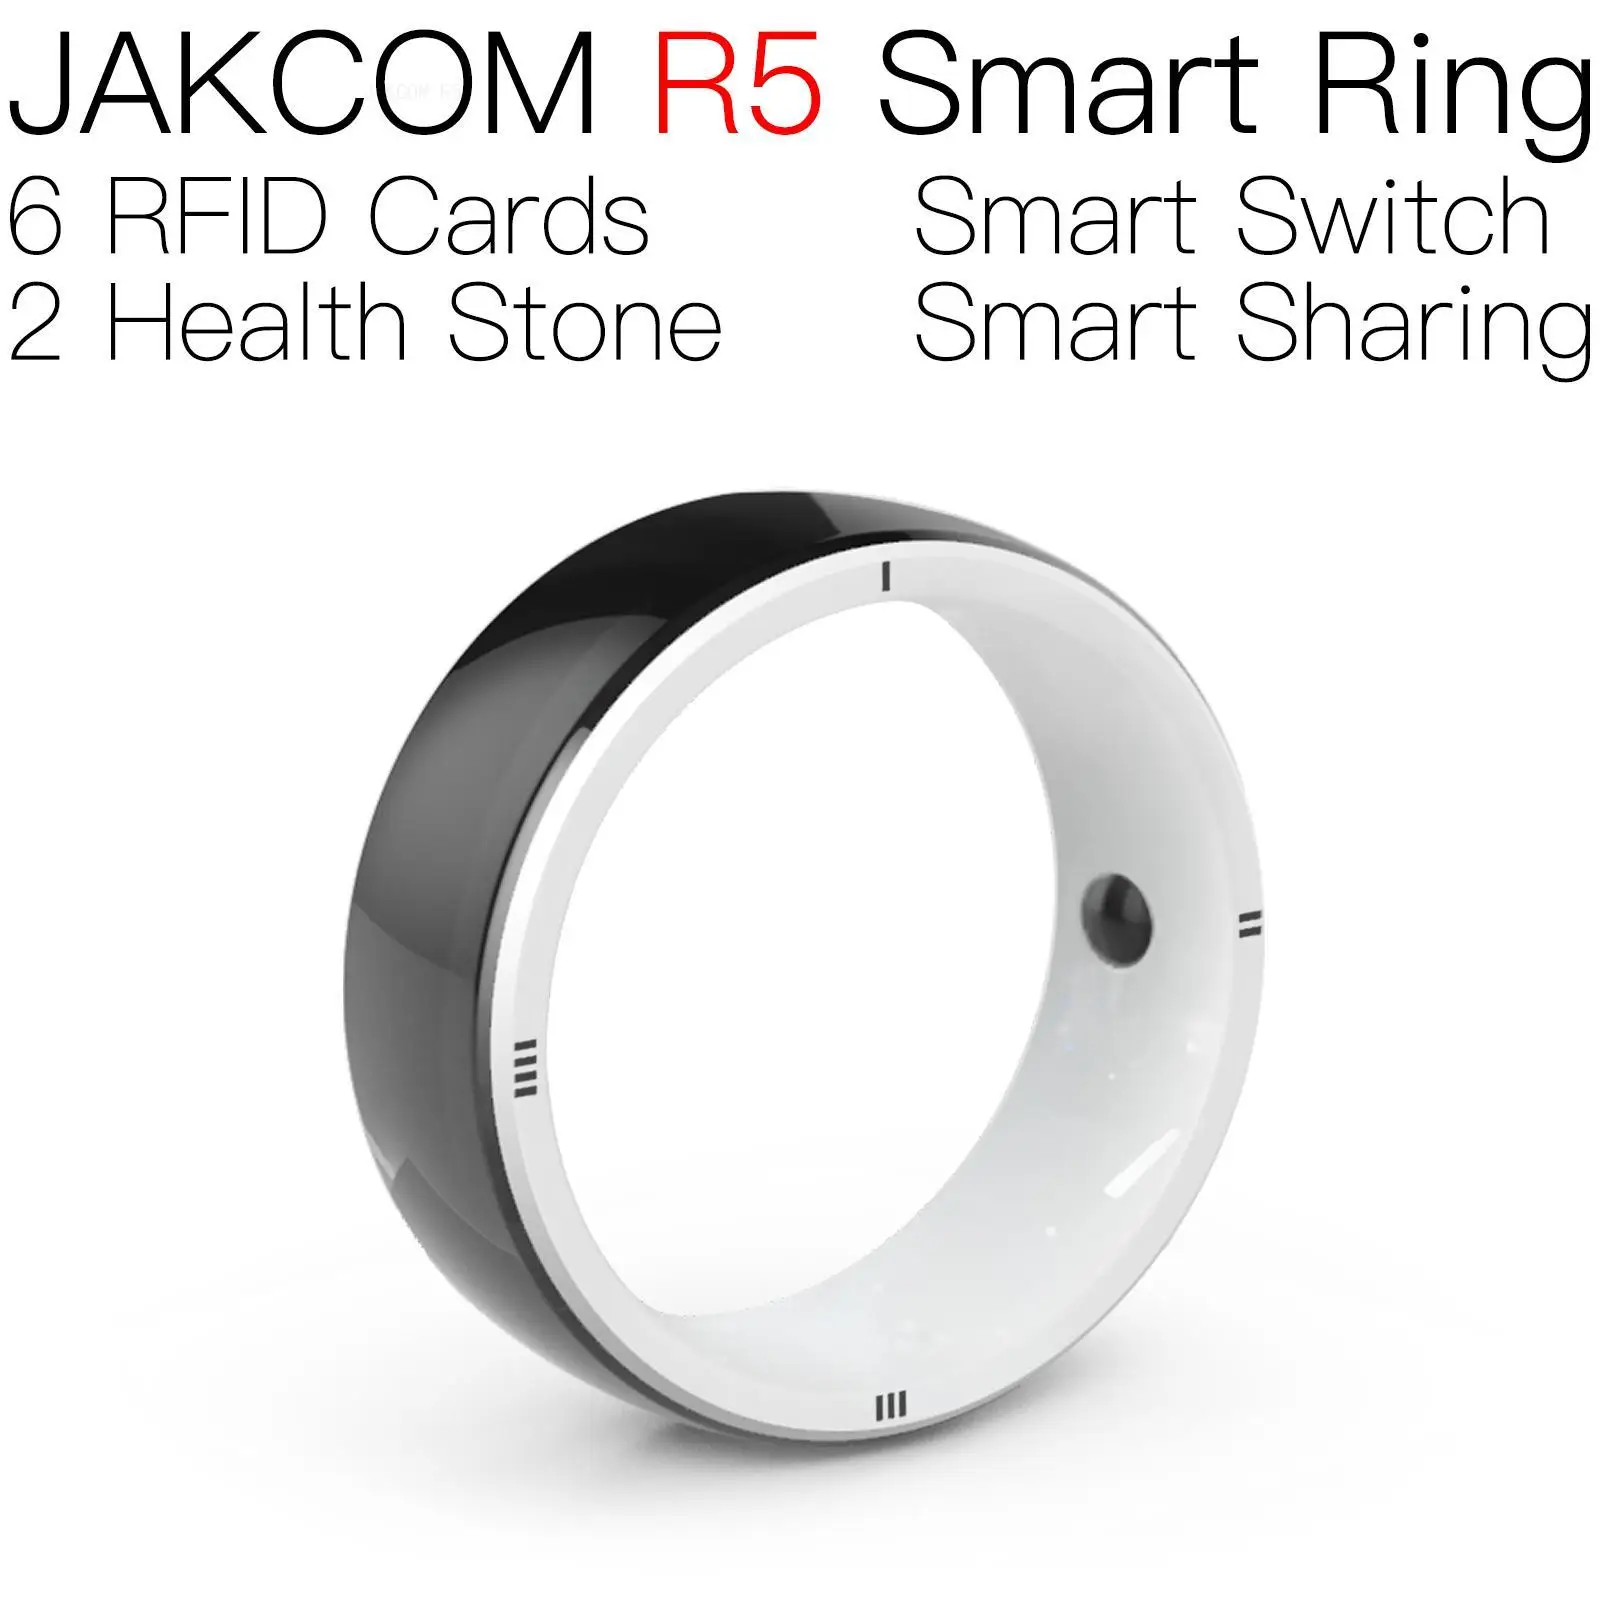 

JAKCOM R5 Smart Ring Super value as card nfc 1k s50 uid change rfid tag steel ntag chip dual wristband bracelet chips uhf